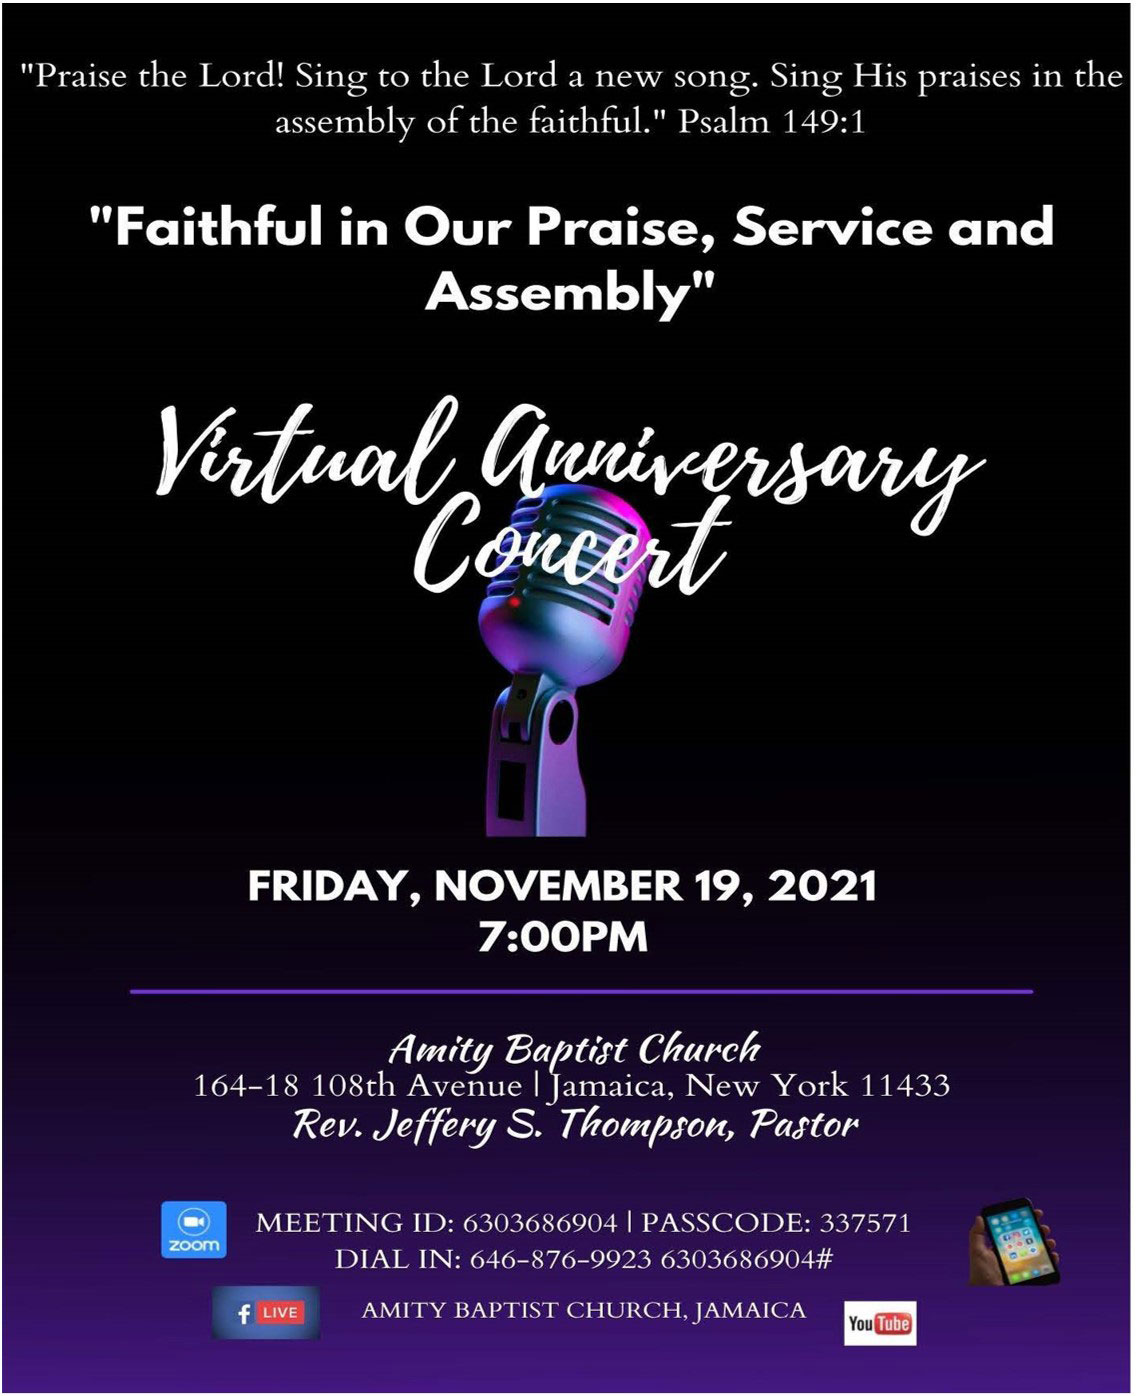 Amity Baptist Church Virtual Anniversary Concert